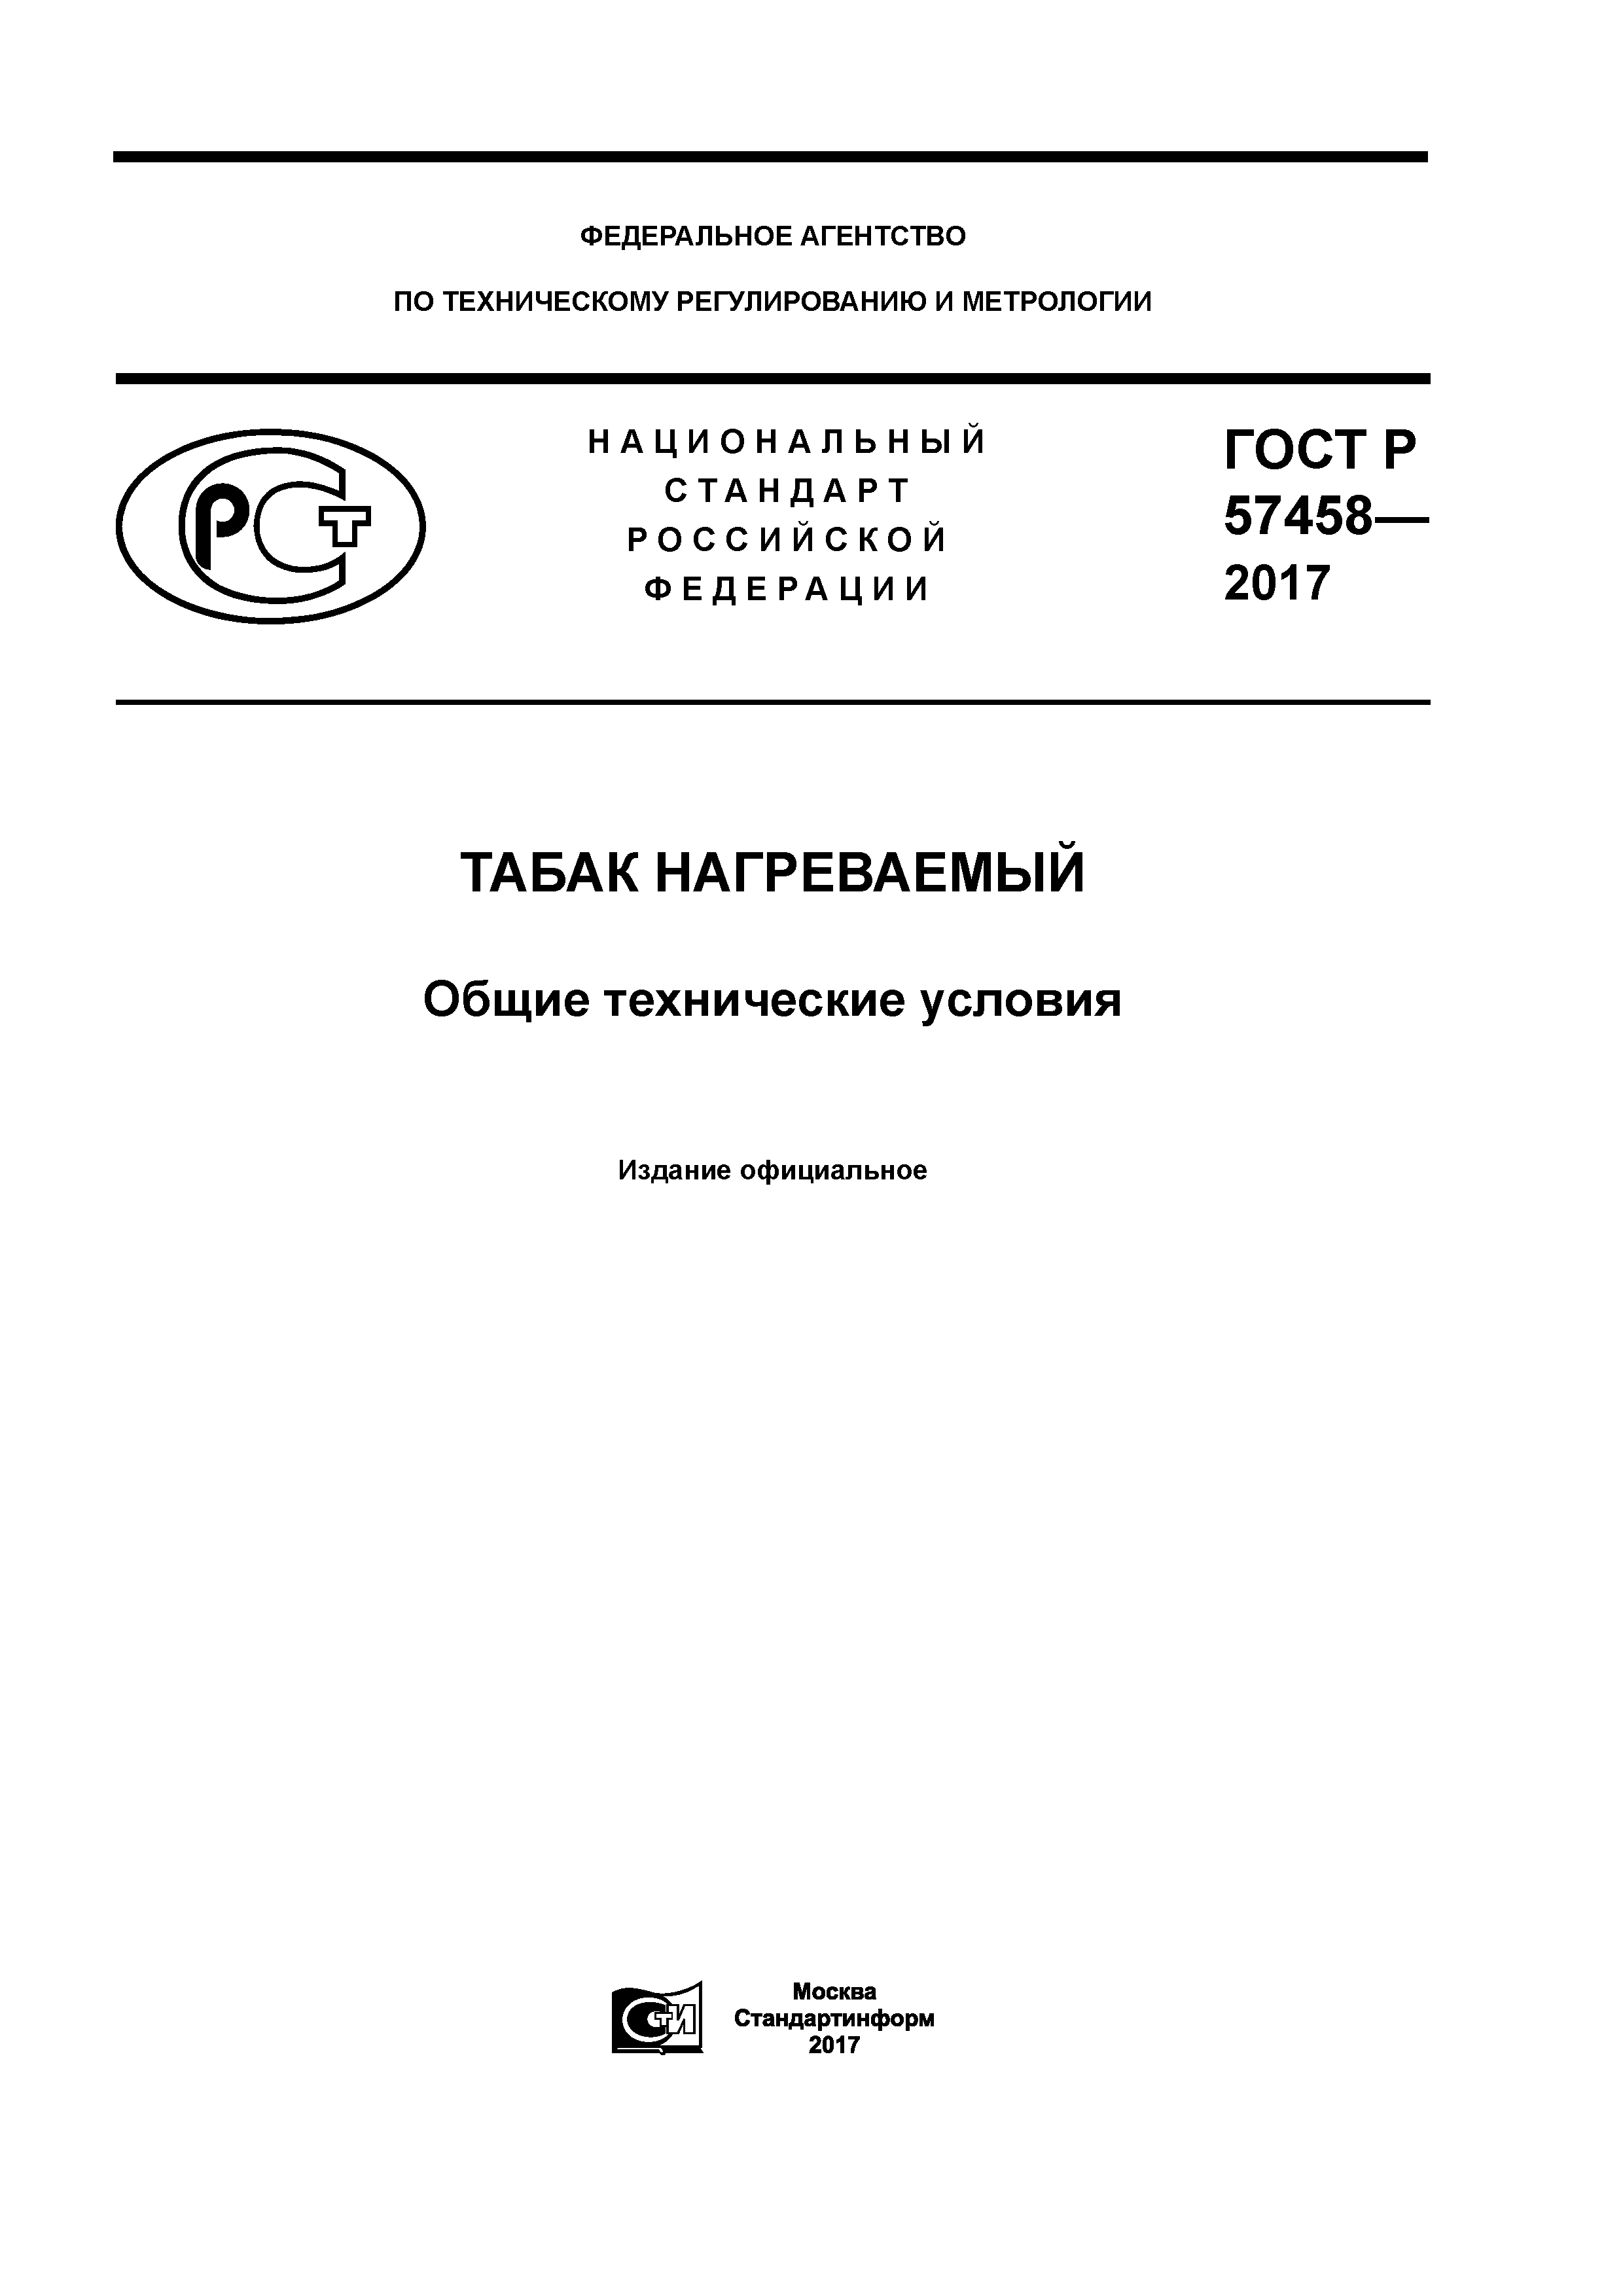 ГОСТ Р 57458-2017